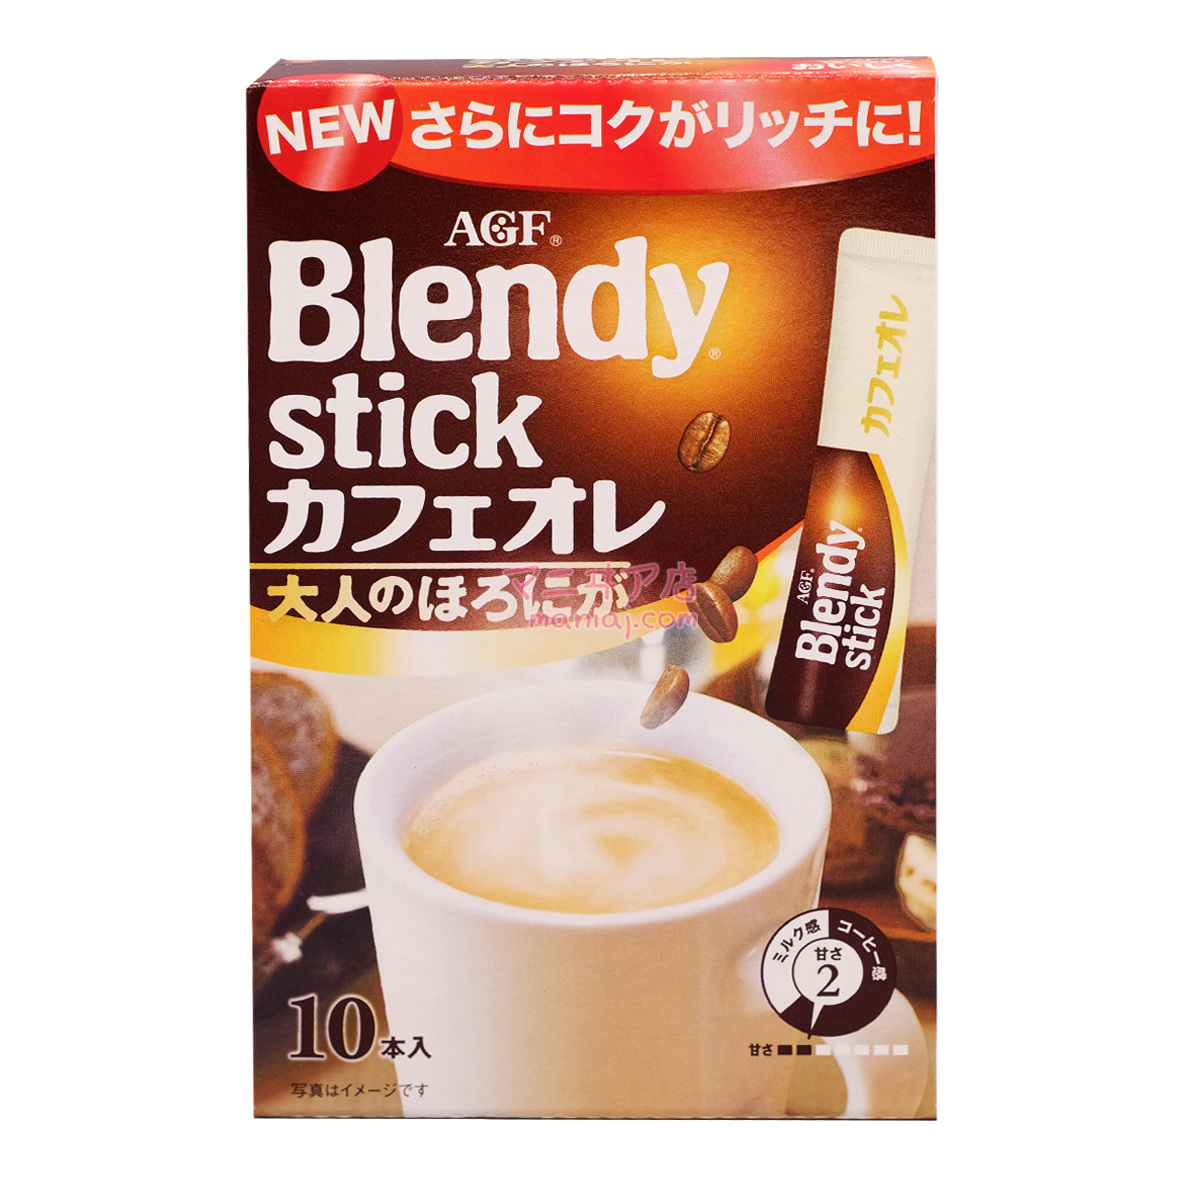 Blendy stick Coffee Milk Adult's Slight Bitterness